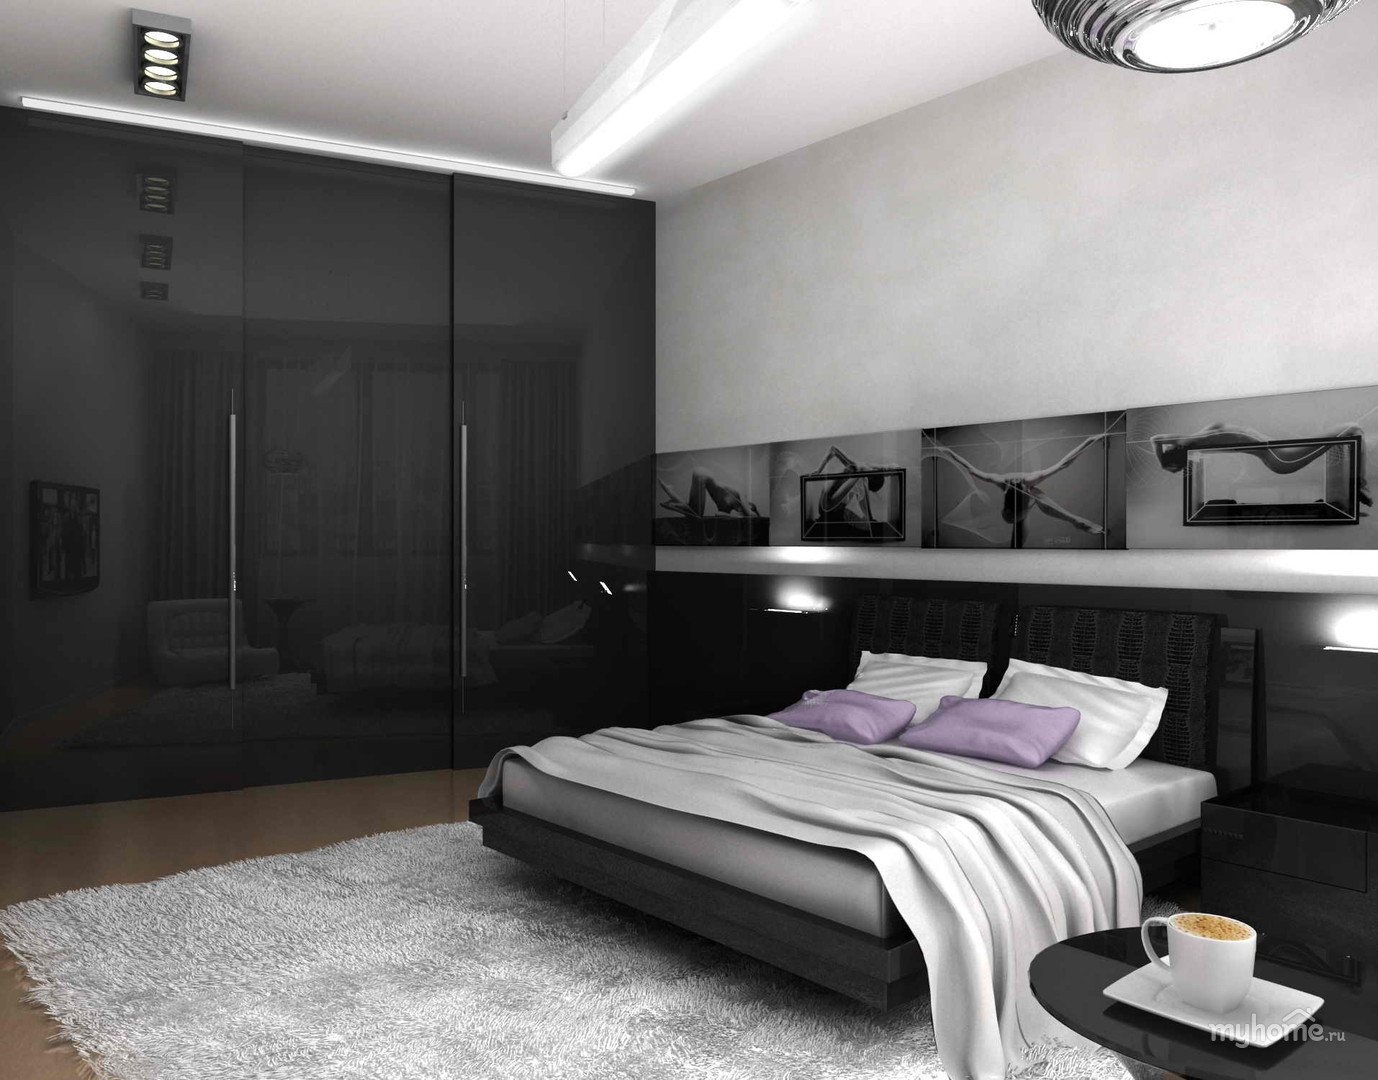 high tech bedroom design photo